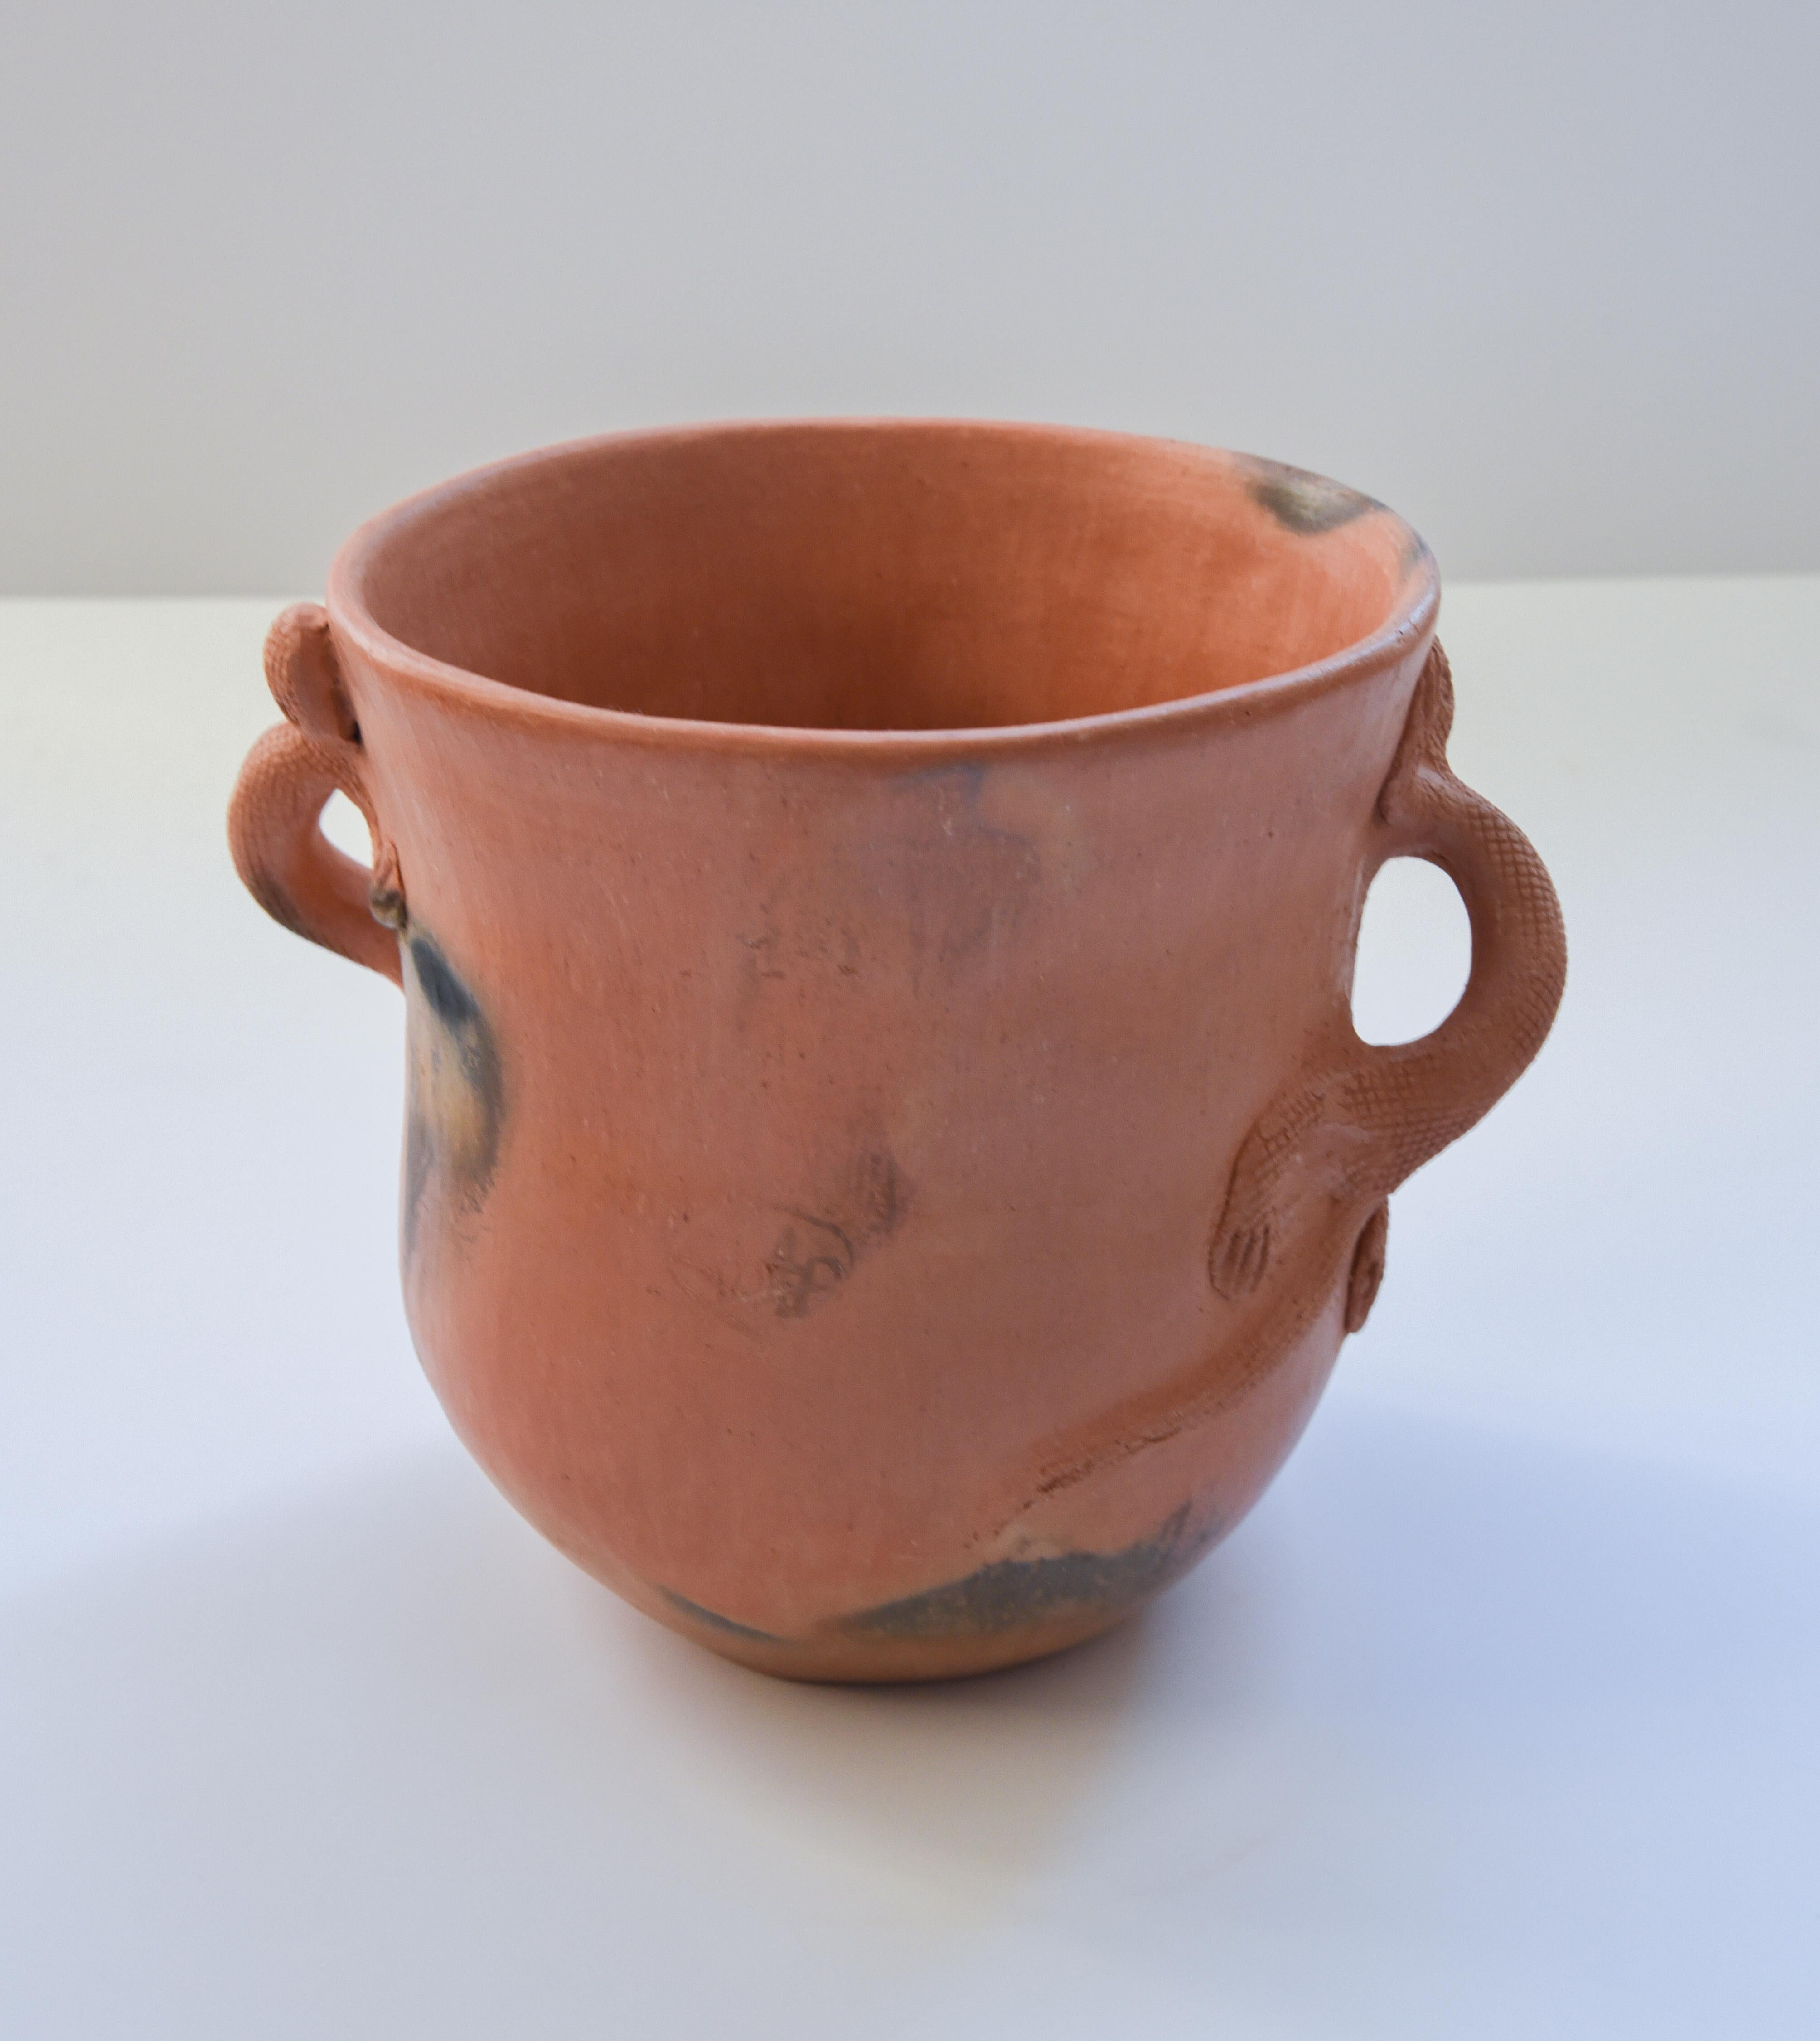 Hand-Crafted Mexican Rustic Pot Folk Art Handmade Ceramic Vessel Terracotta Oaxaca Clay